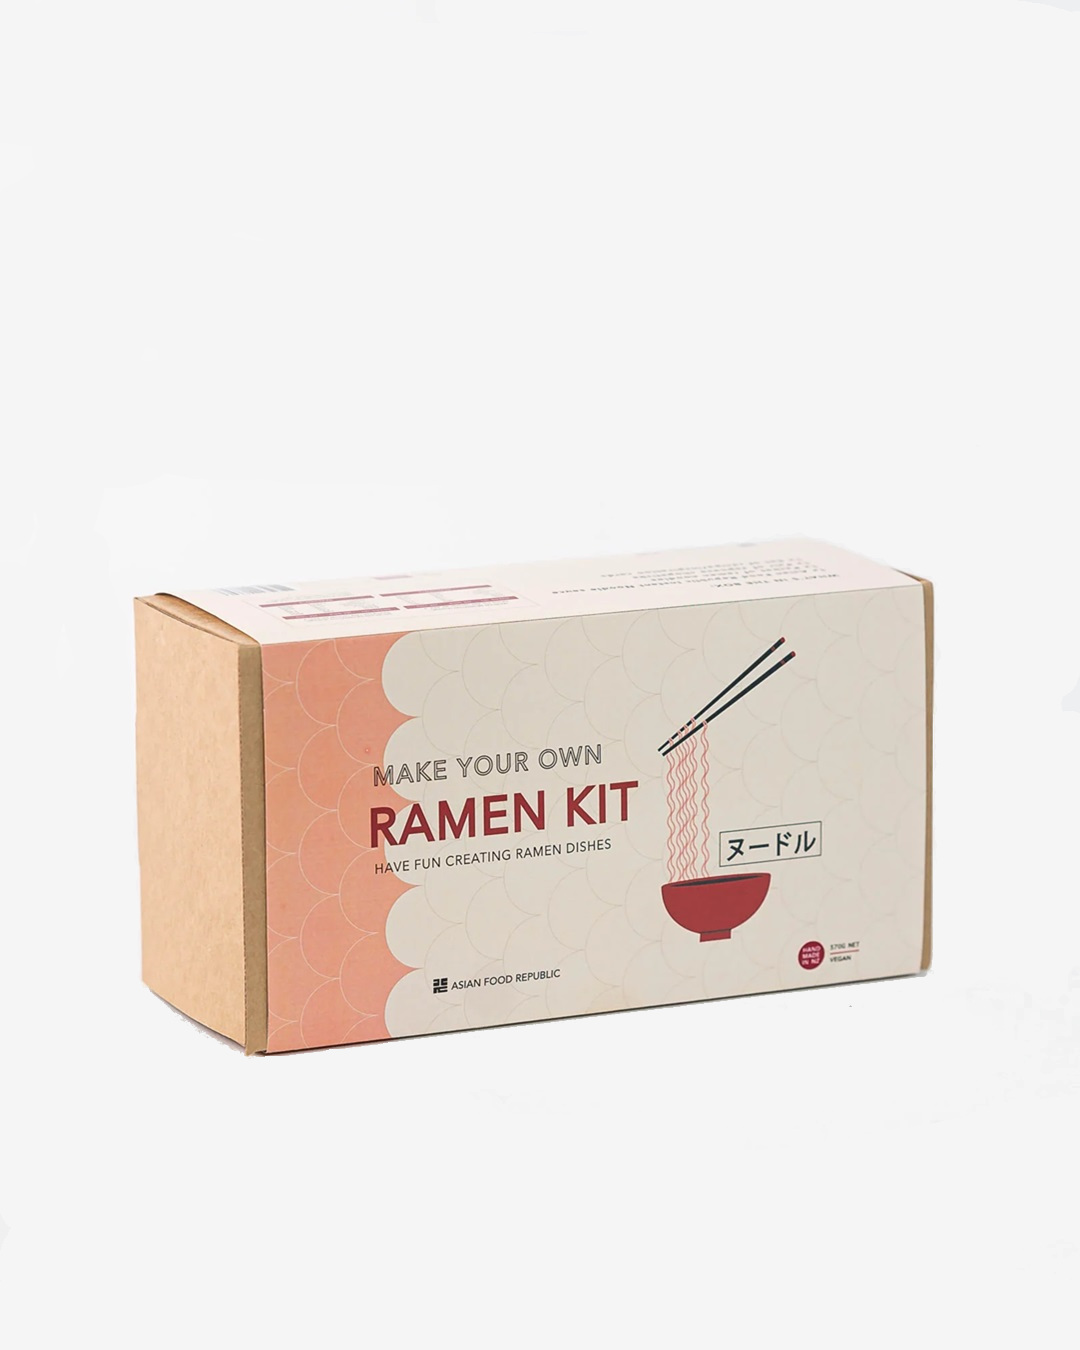 Ramen box food kit